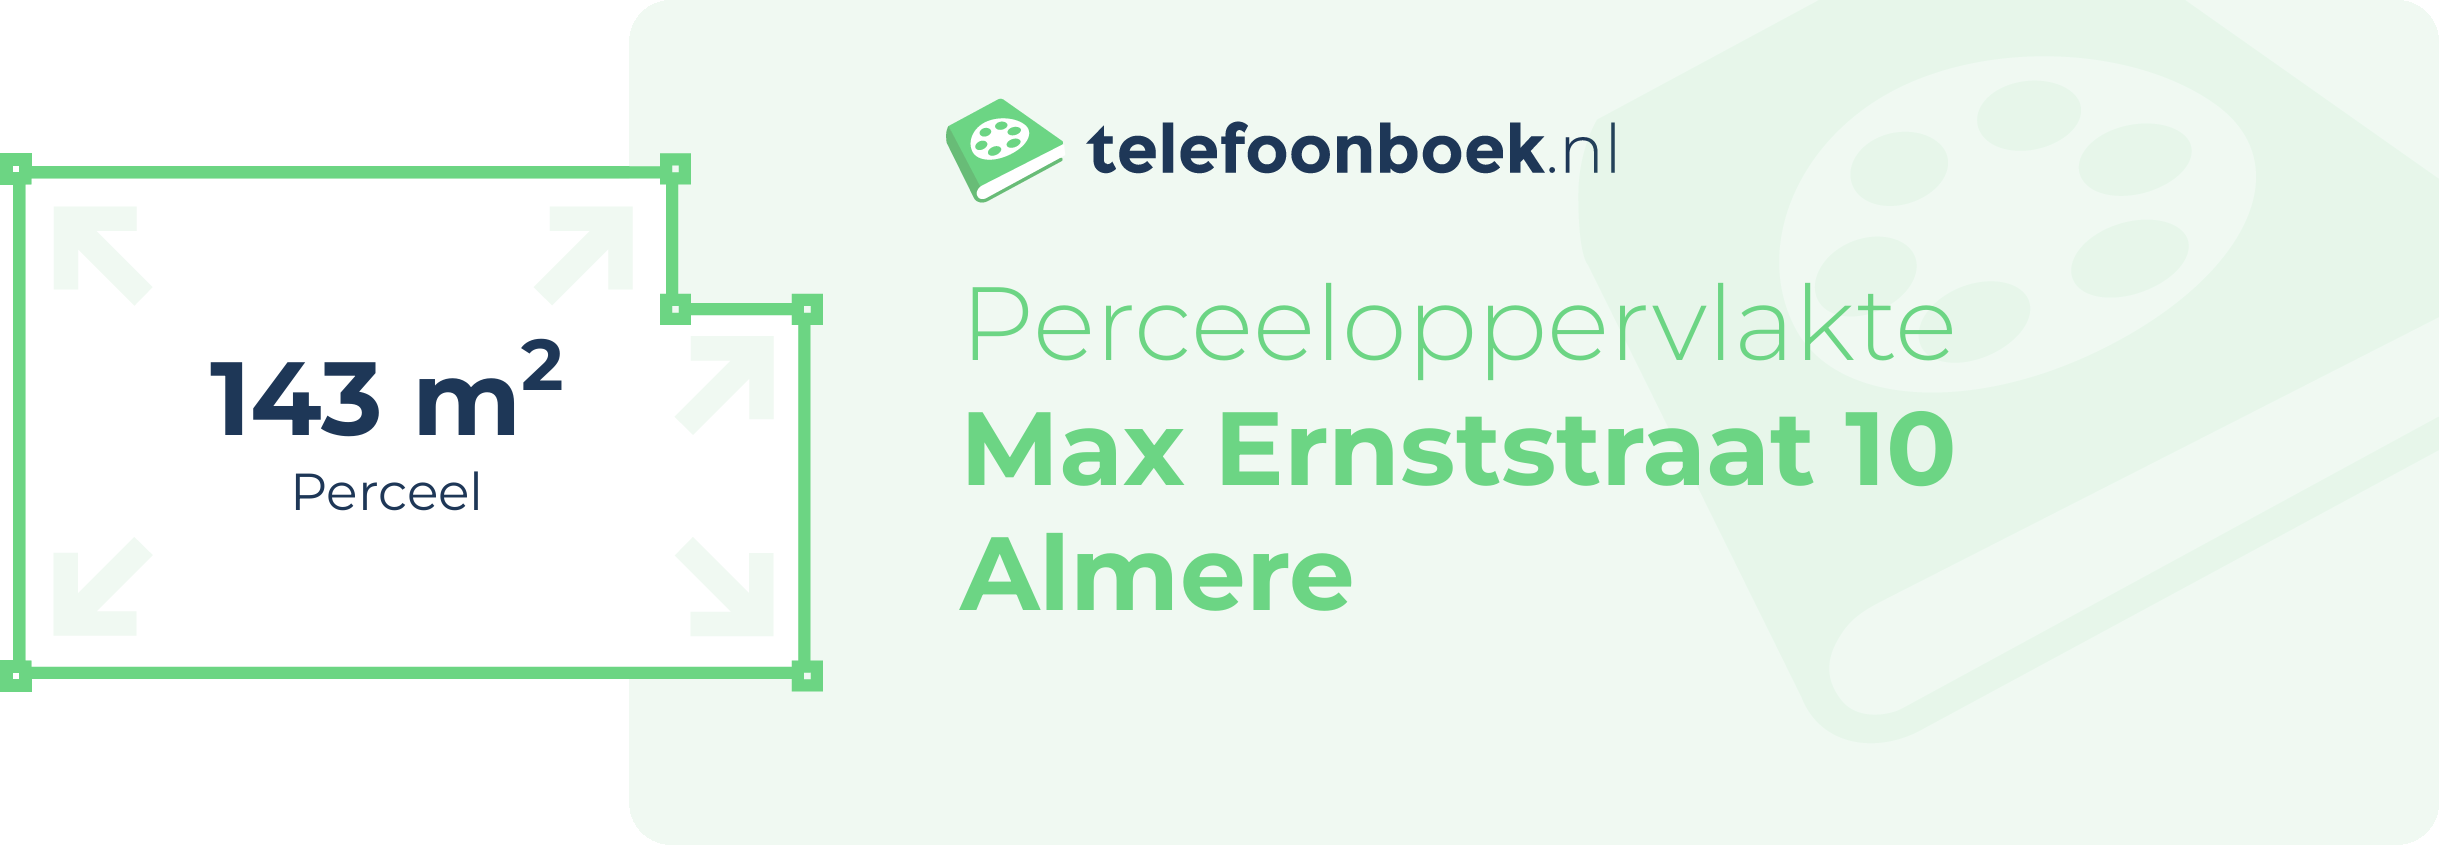 Perceeloppervlakte Max Ernststraat 10 Almere